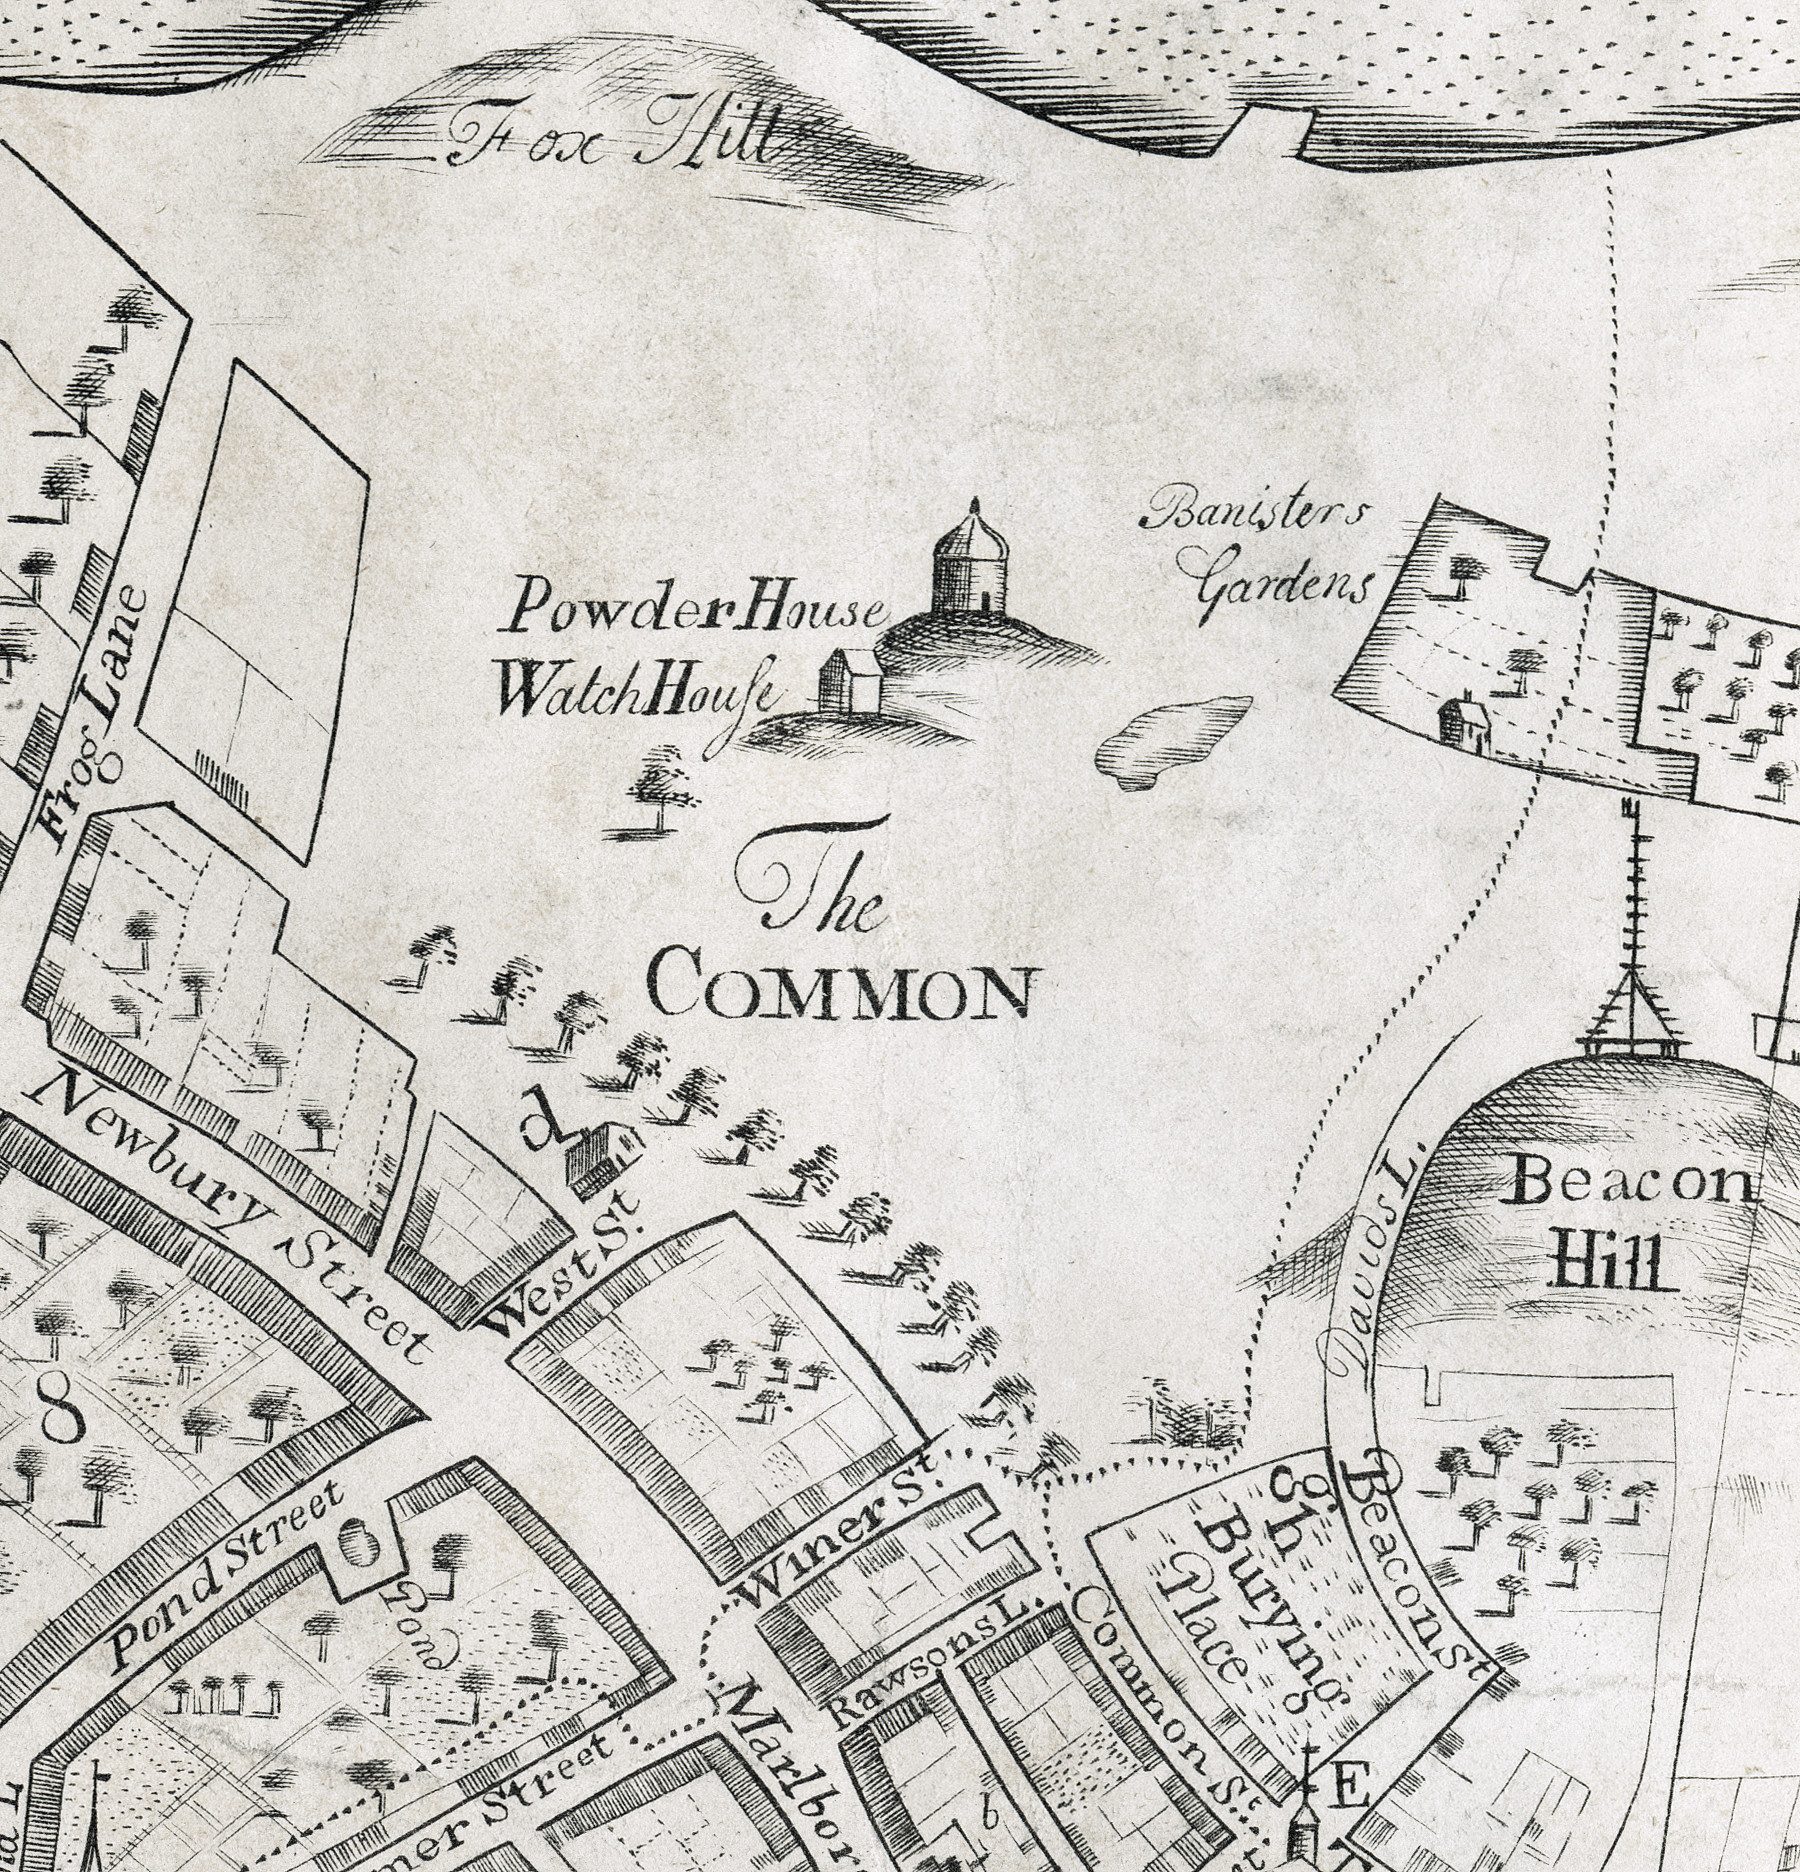 1722 map showing Boston's powder house on Boston Common